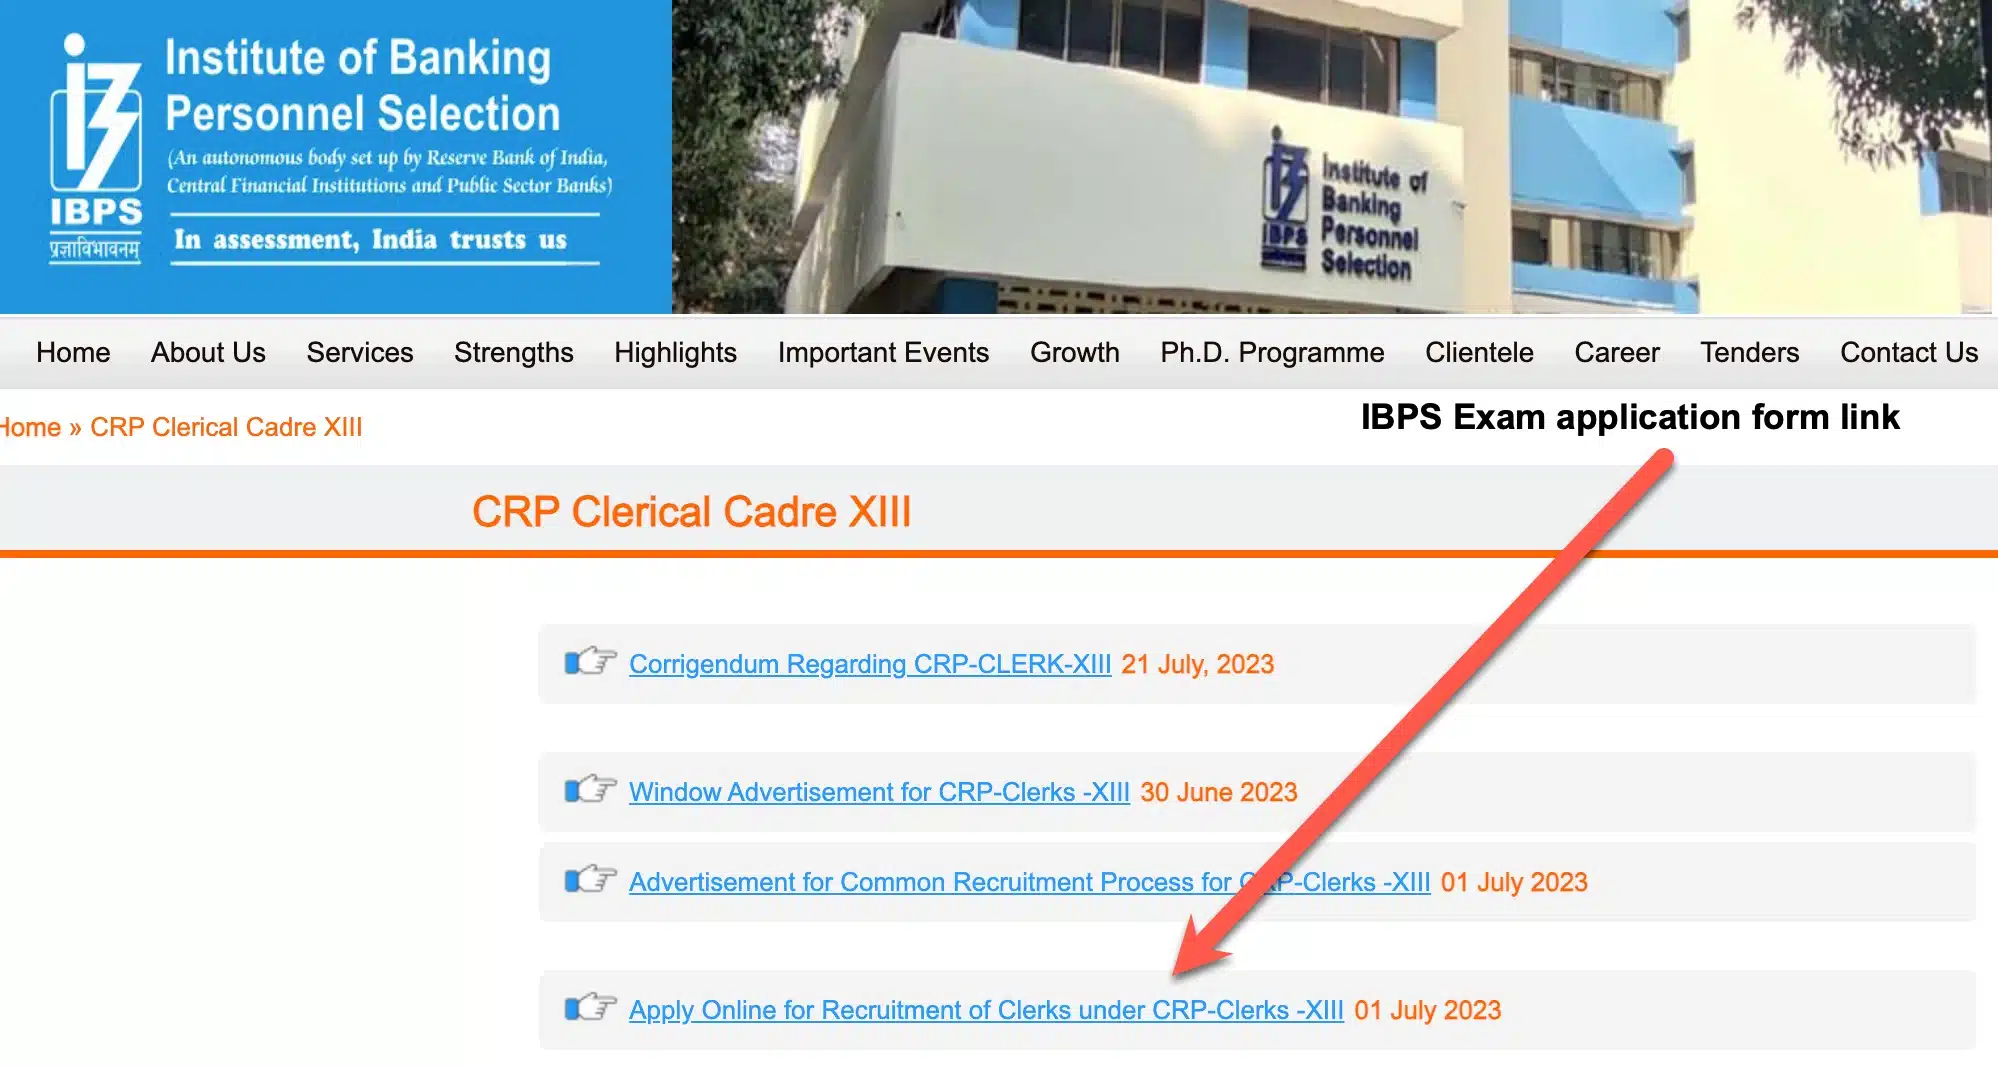 IBPS Exam application form - CRP Clerk XIII